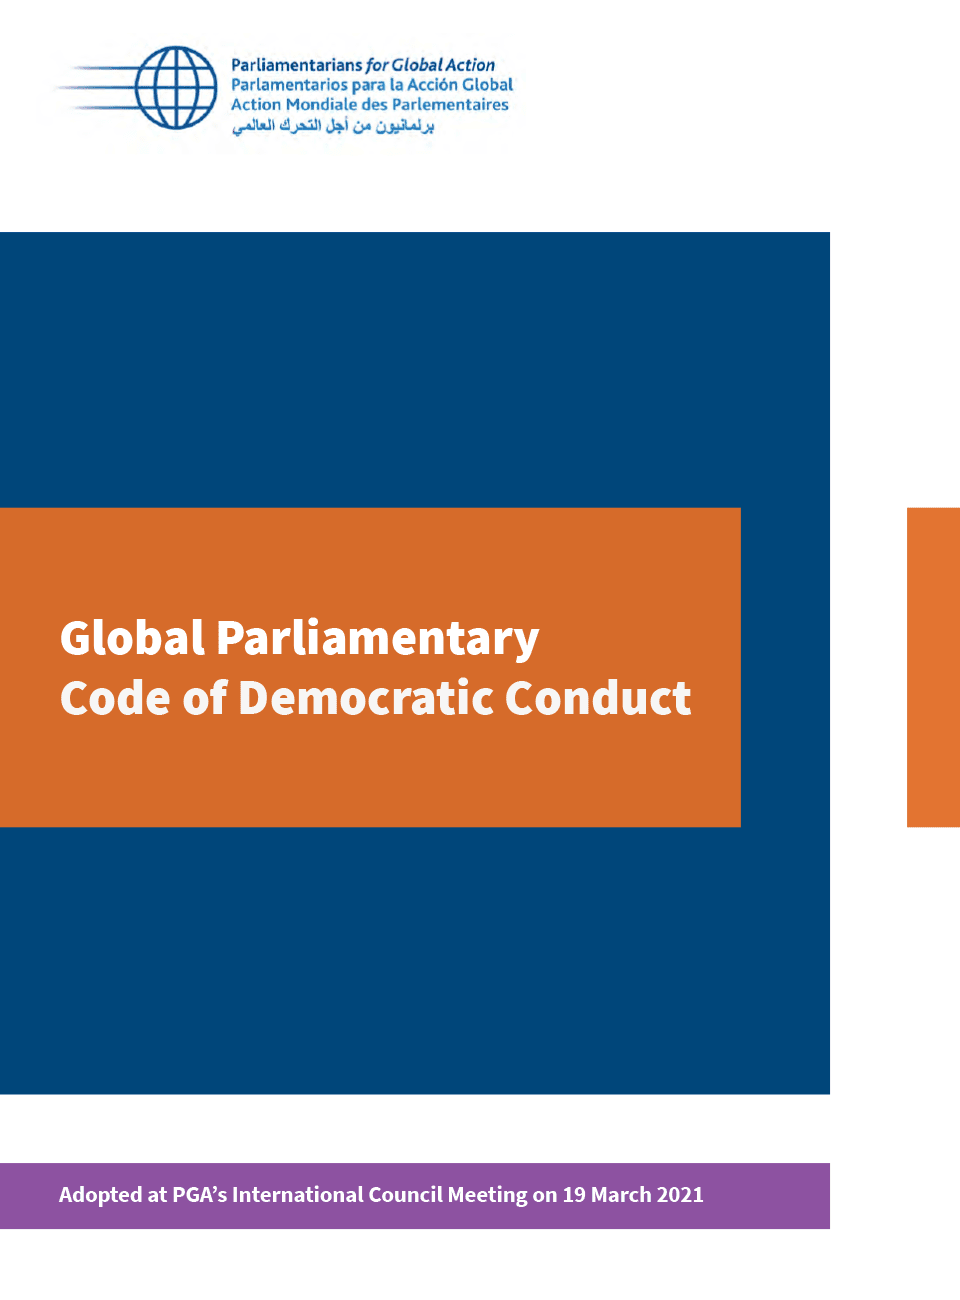 Global Parliamentary Code of Democratic Conduct